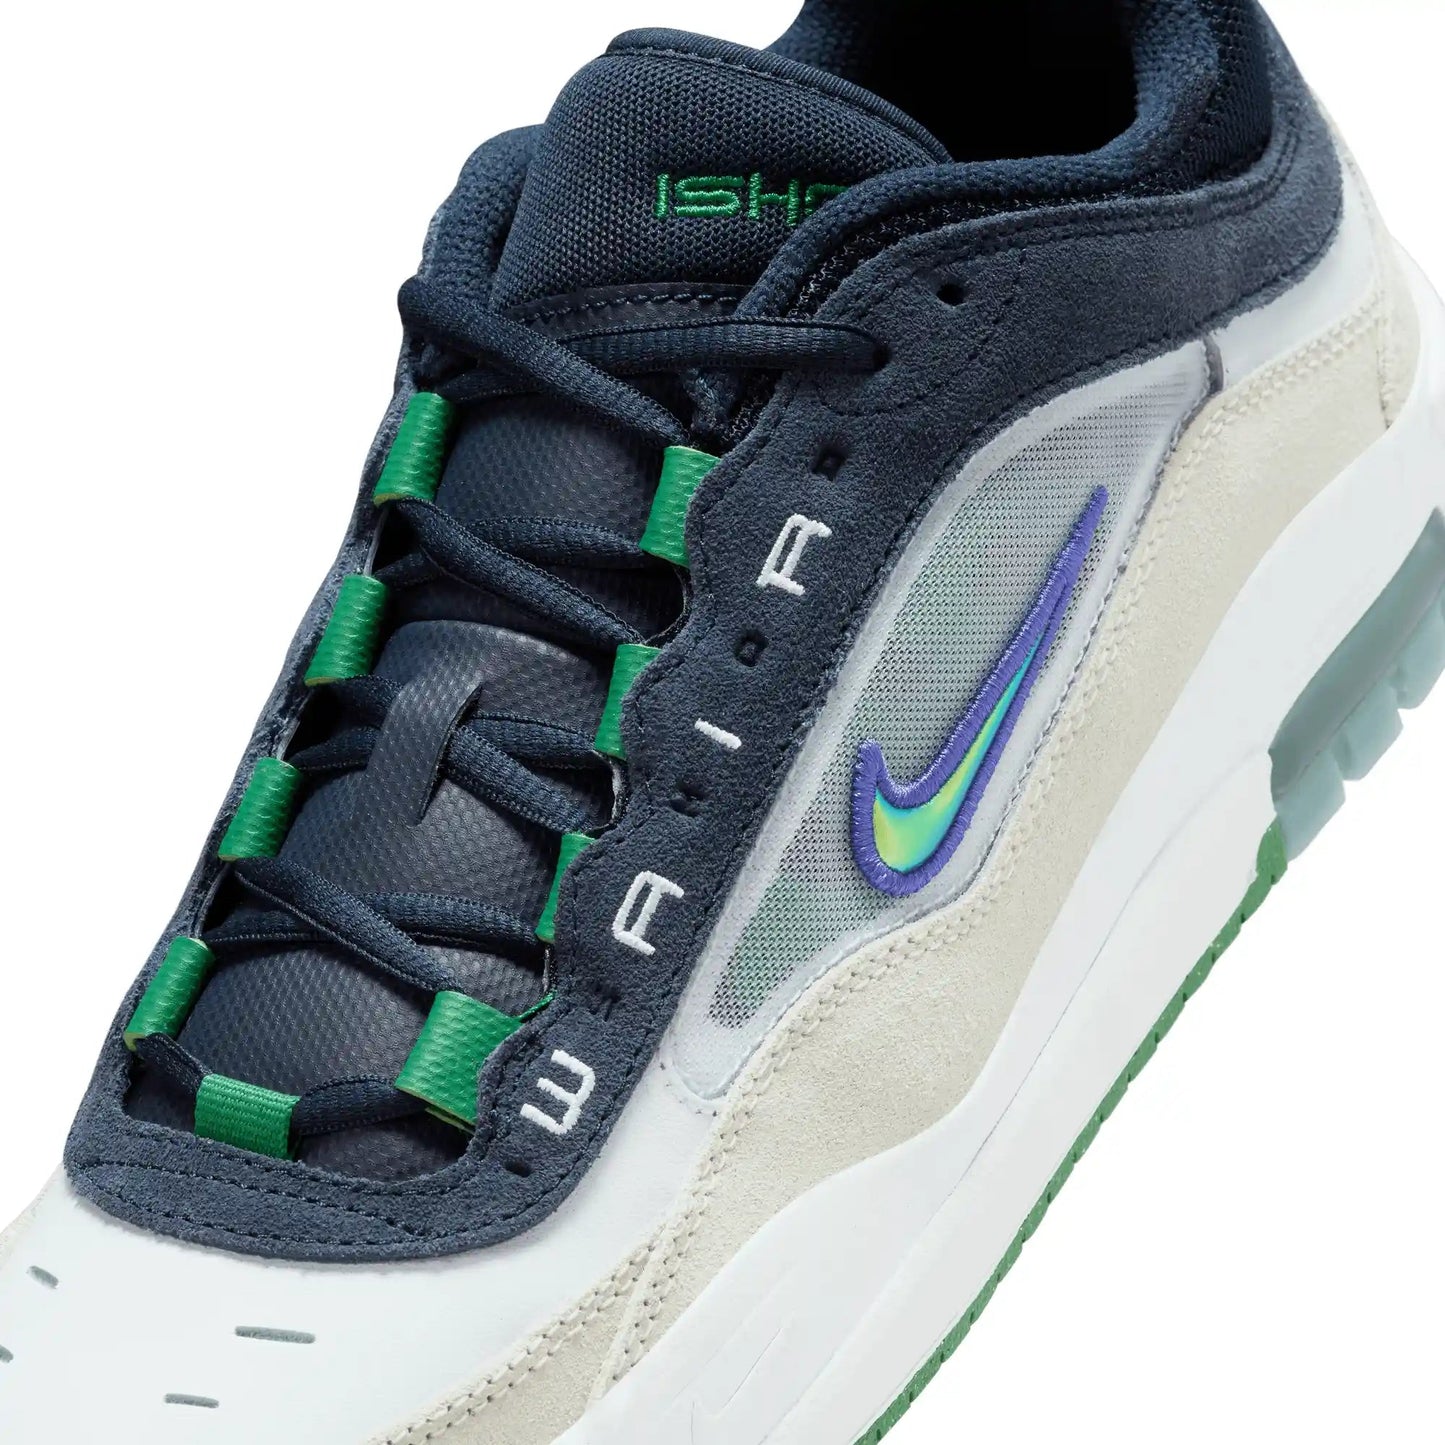 Nike SB Ishod 2, white/persian violet-obsidian-pine green - Tiki Room Skateboards - 3